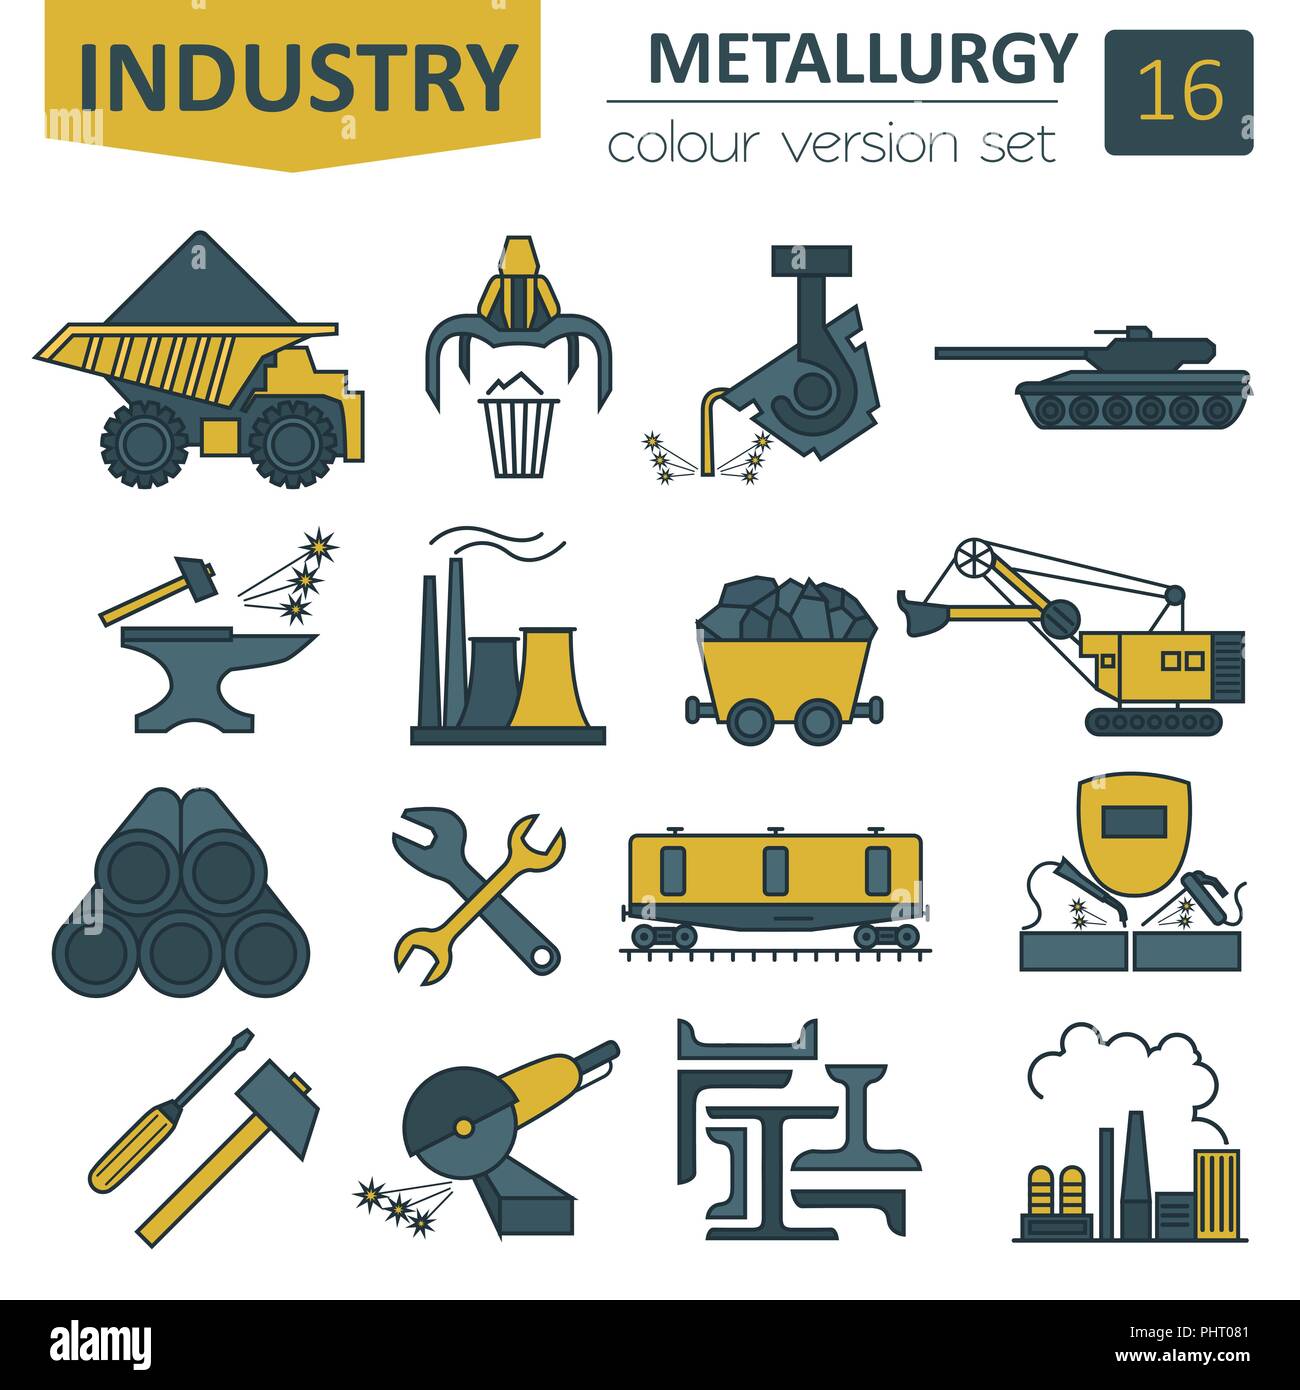 Metallurgy icon set. Colour version design. Vector illustration Stock Vector